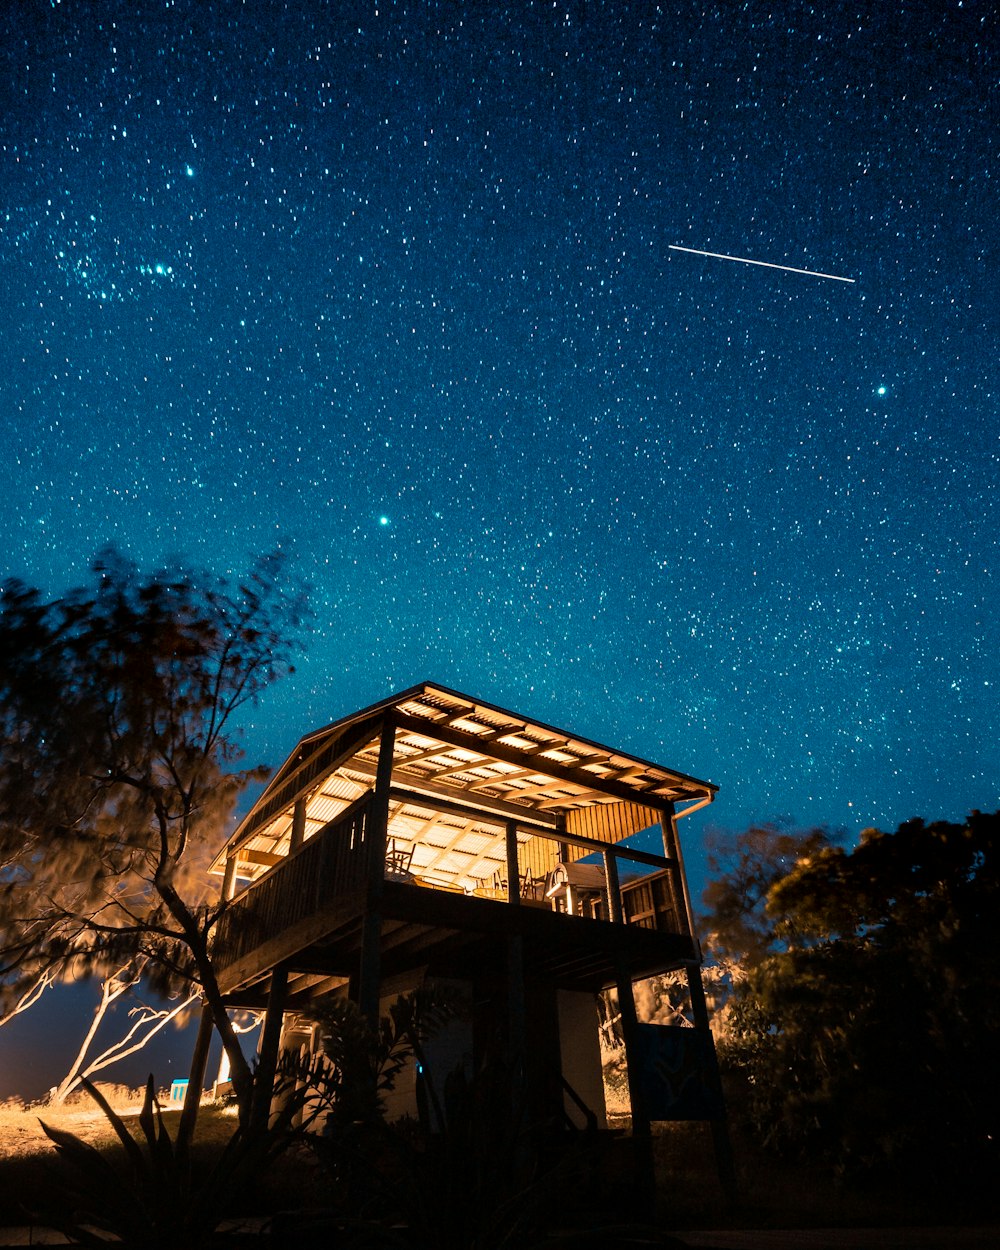 shooting star during nighttime